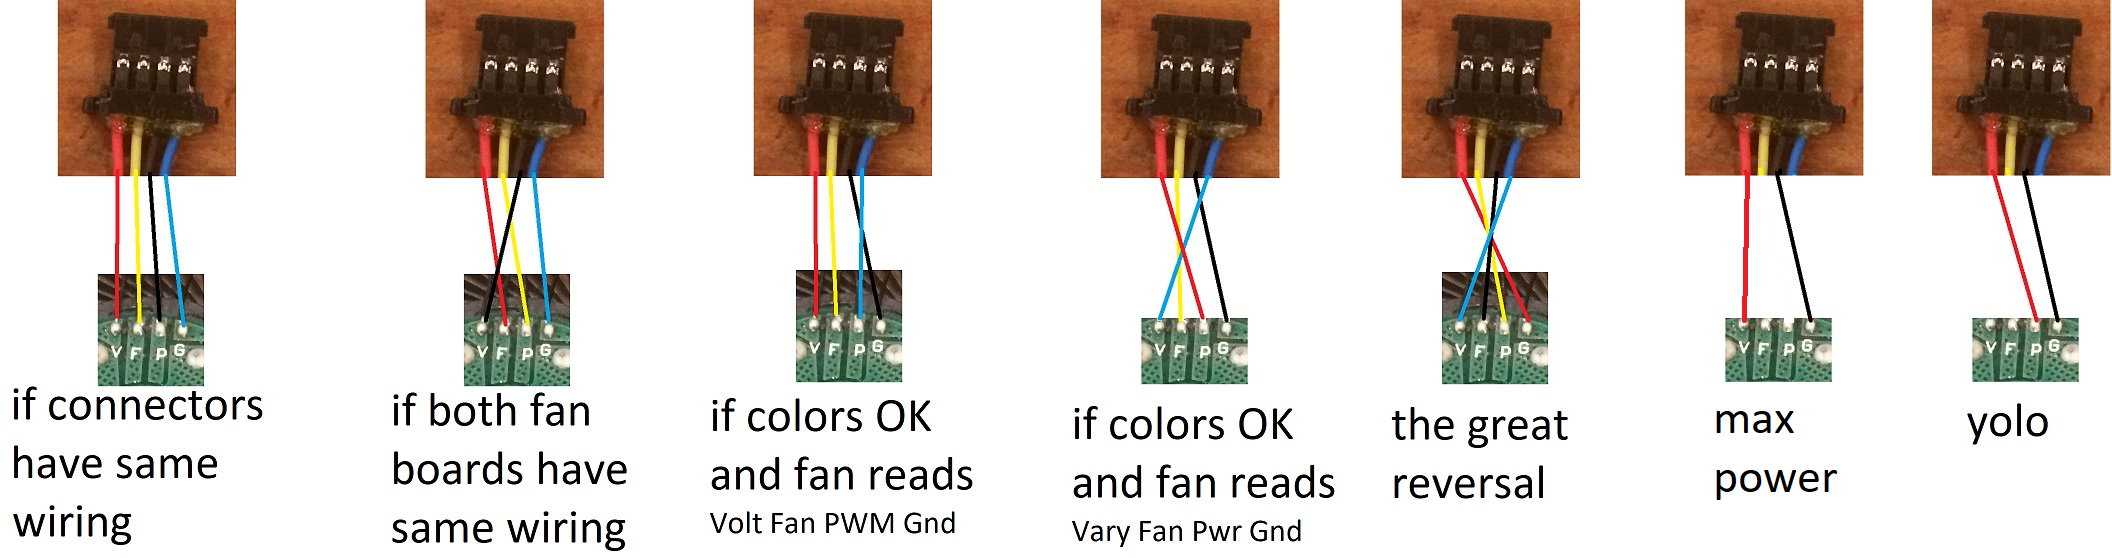 Rewiring 5v fan (4-pin connector) | TechPowerUp Forums